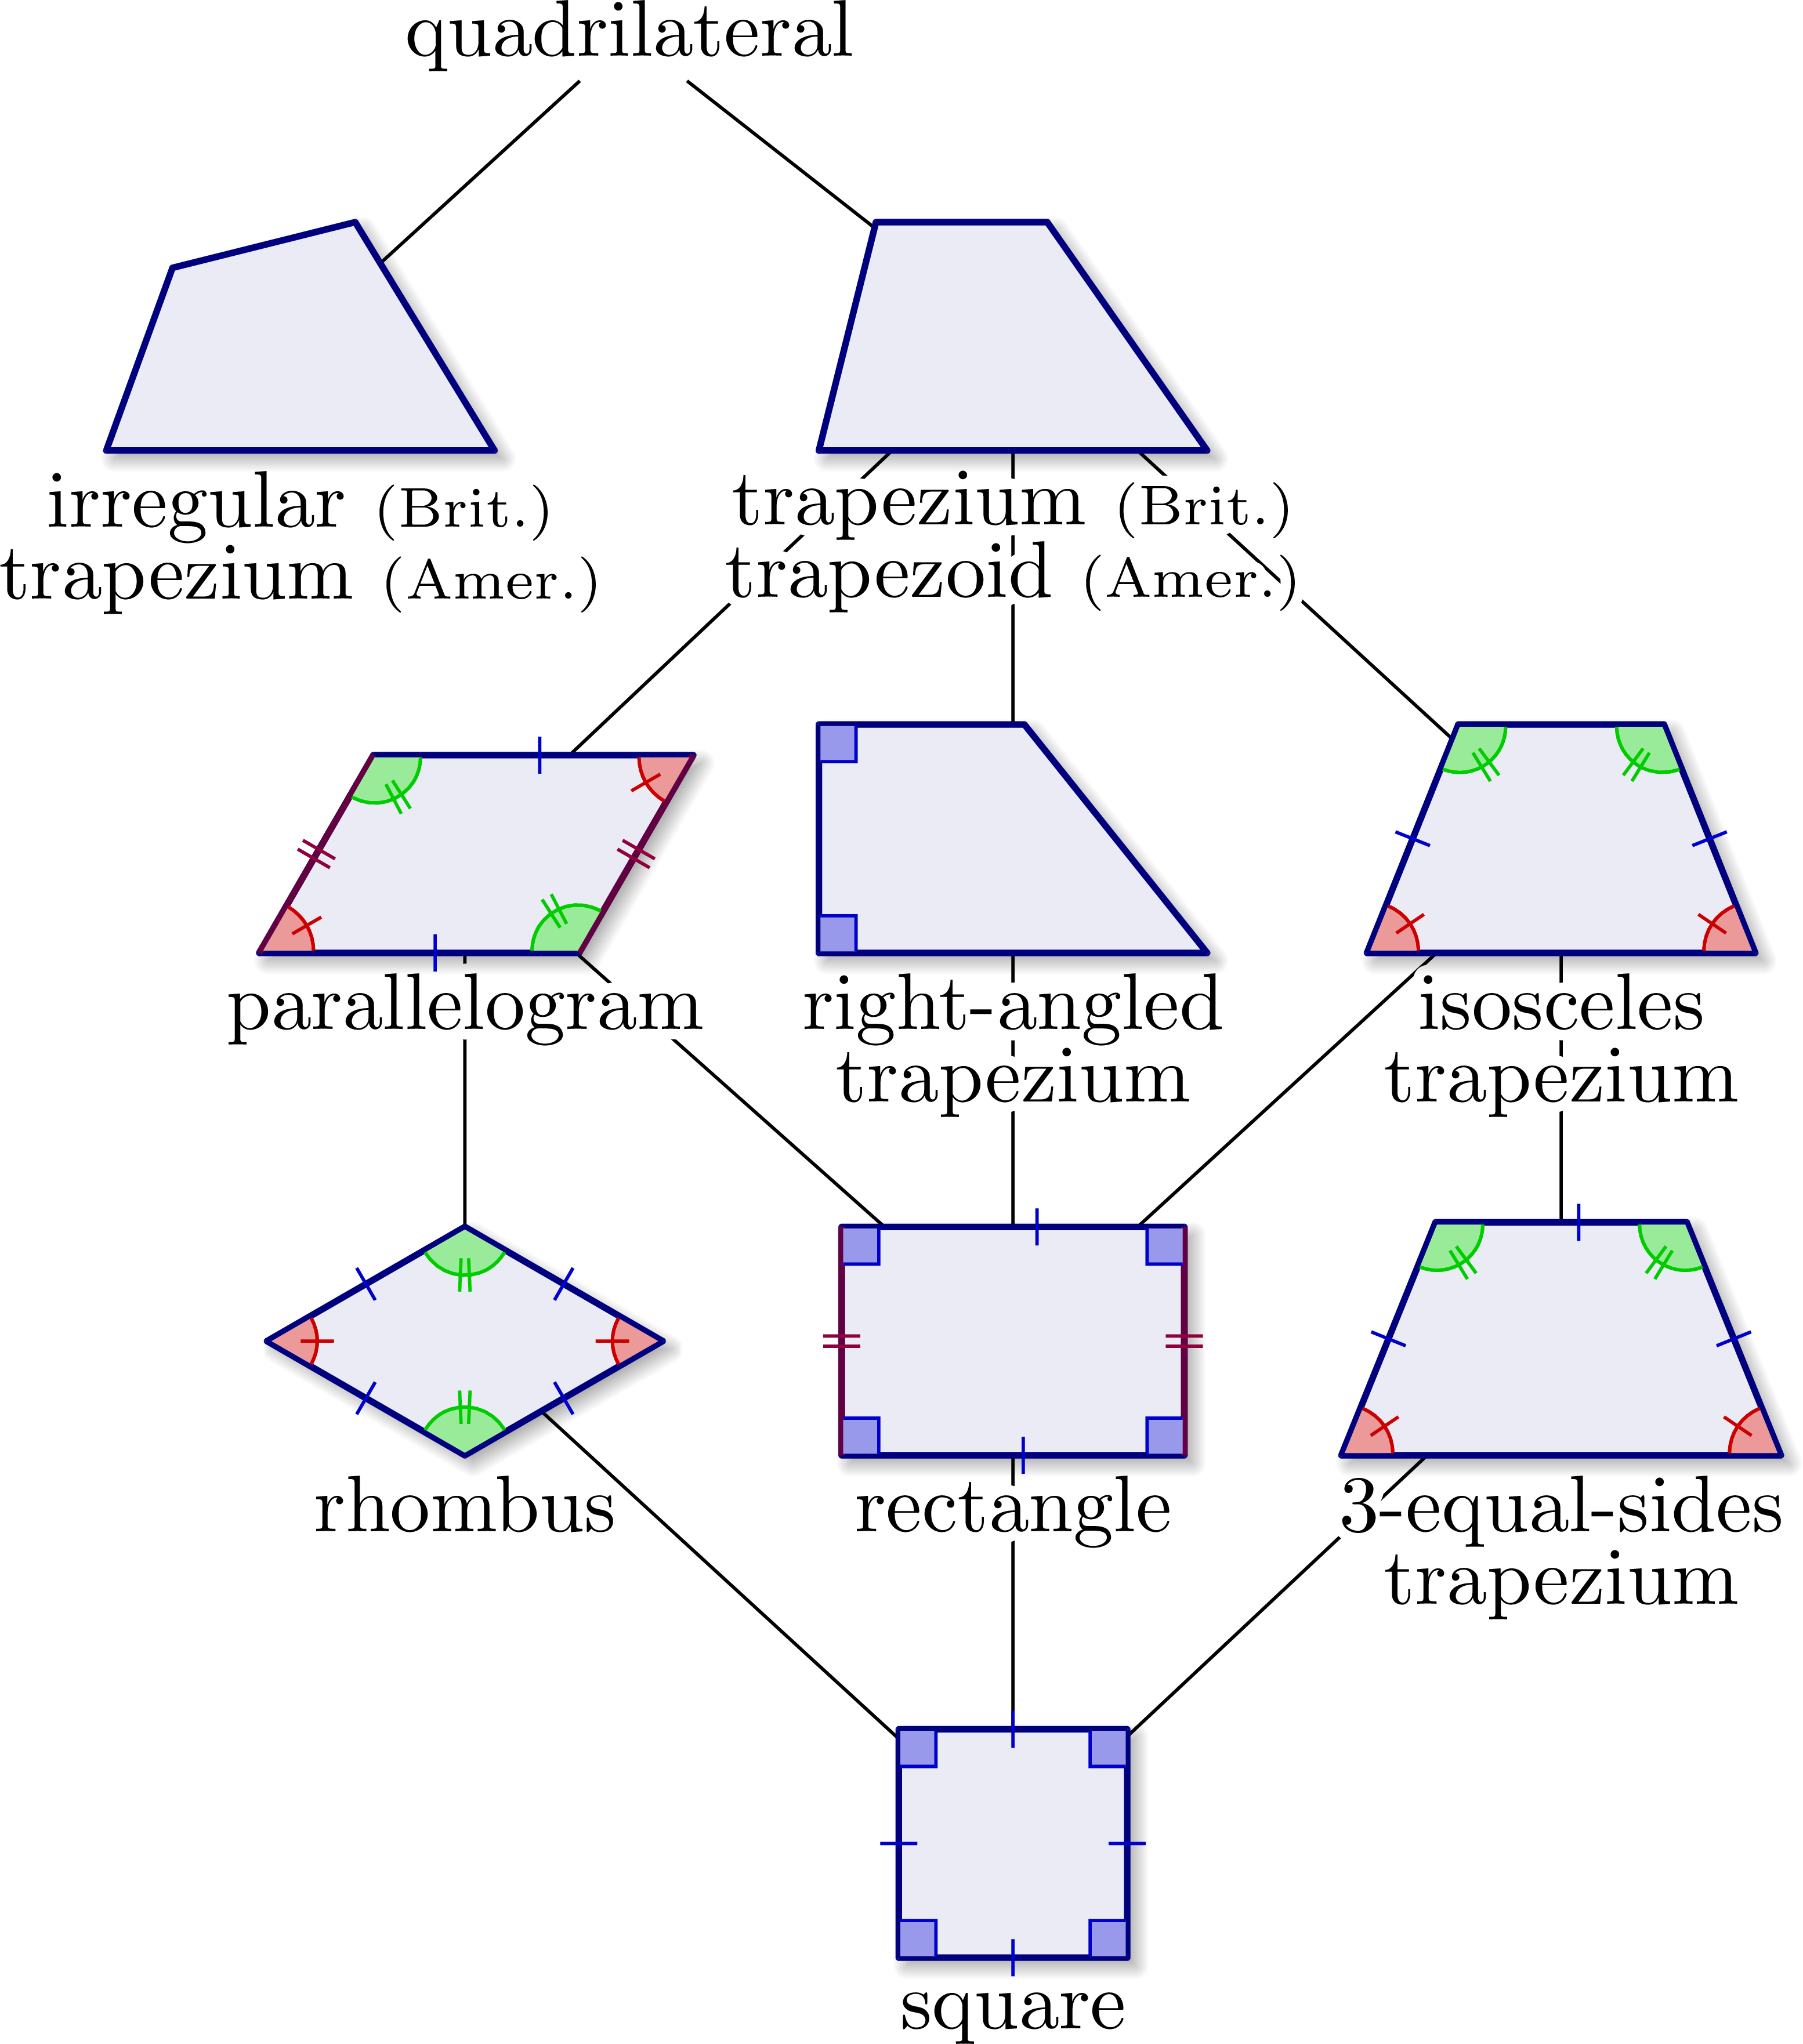 Quadrilateral hierarchy